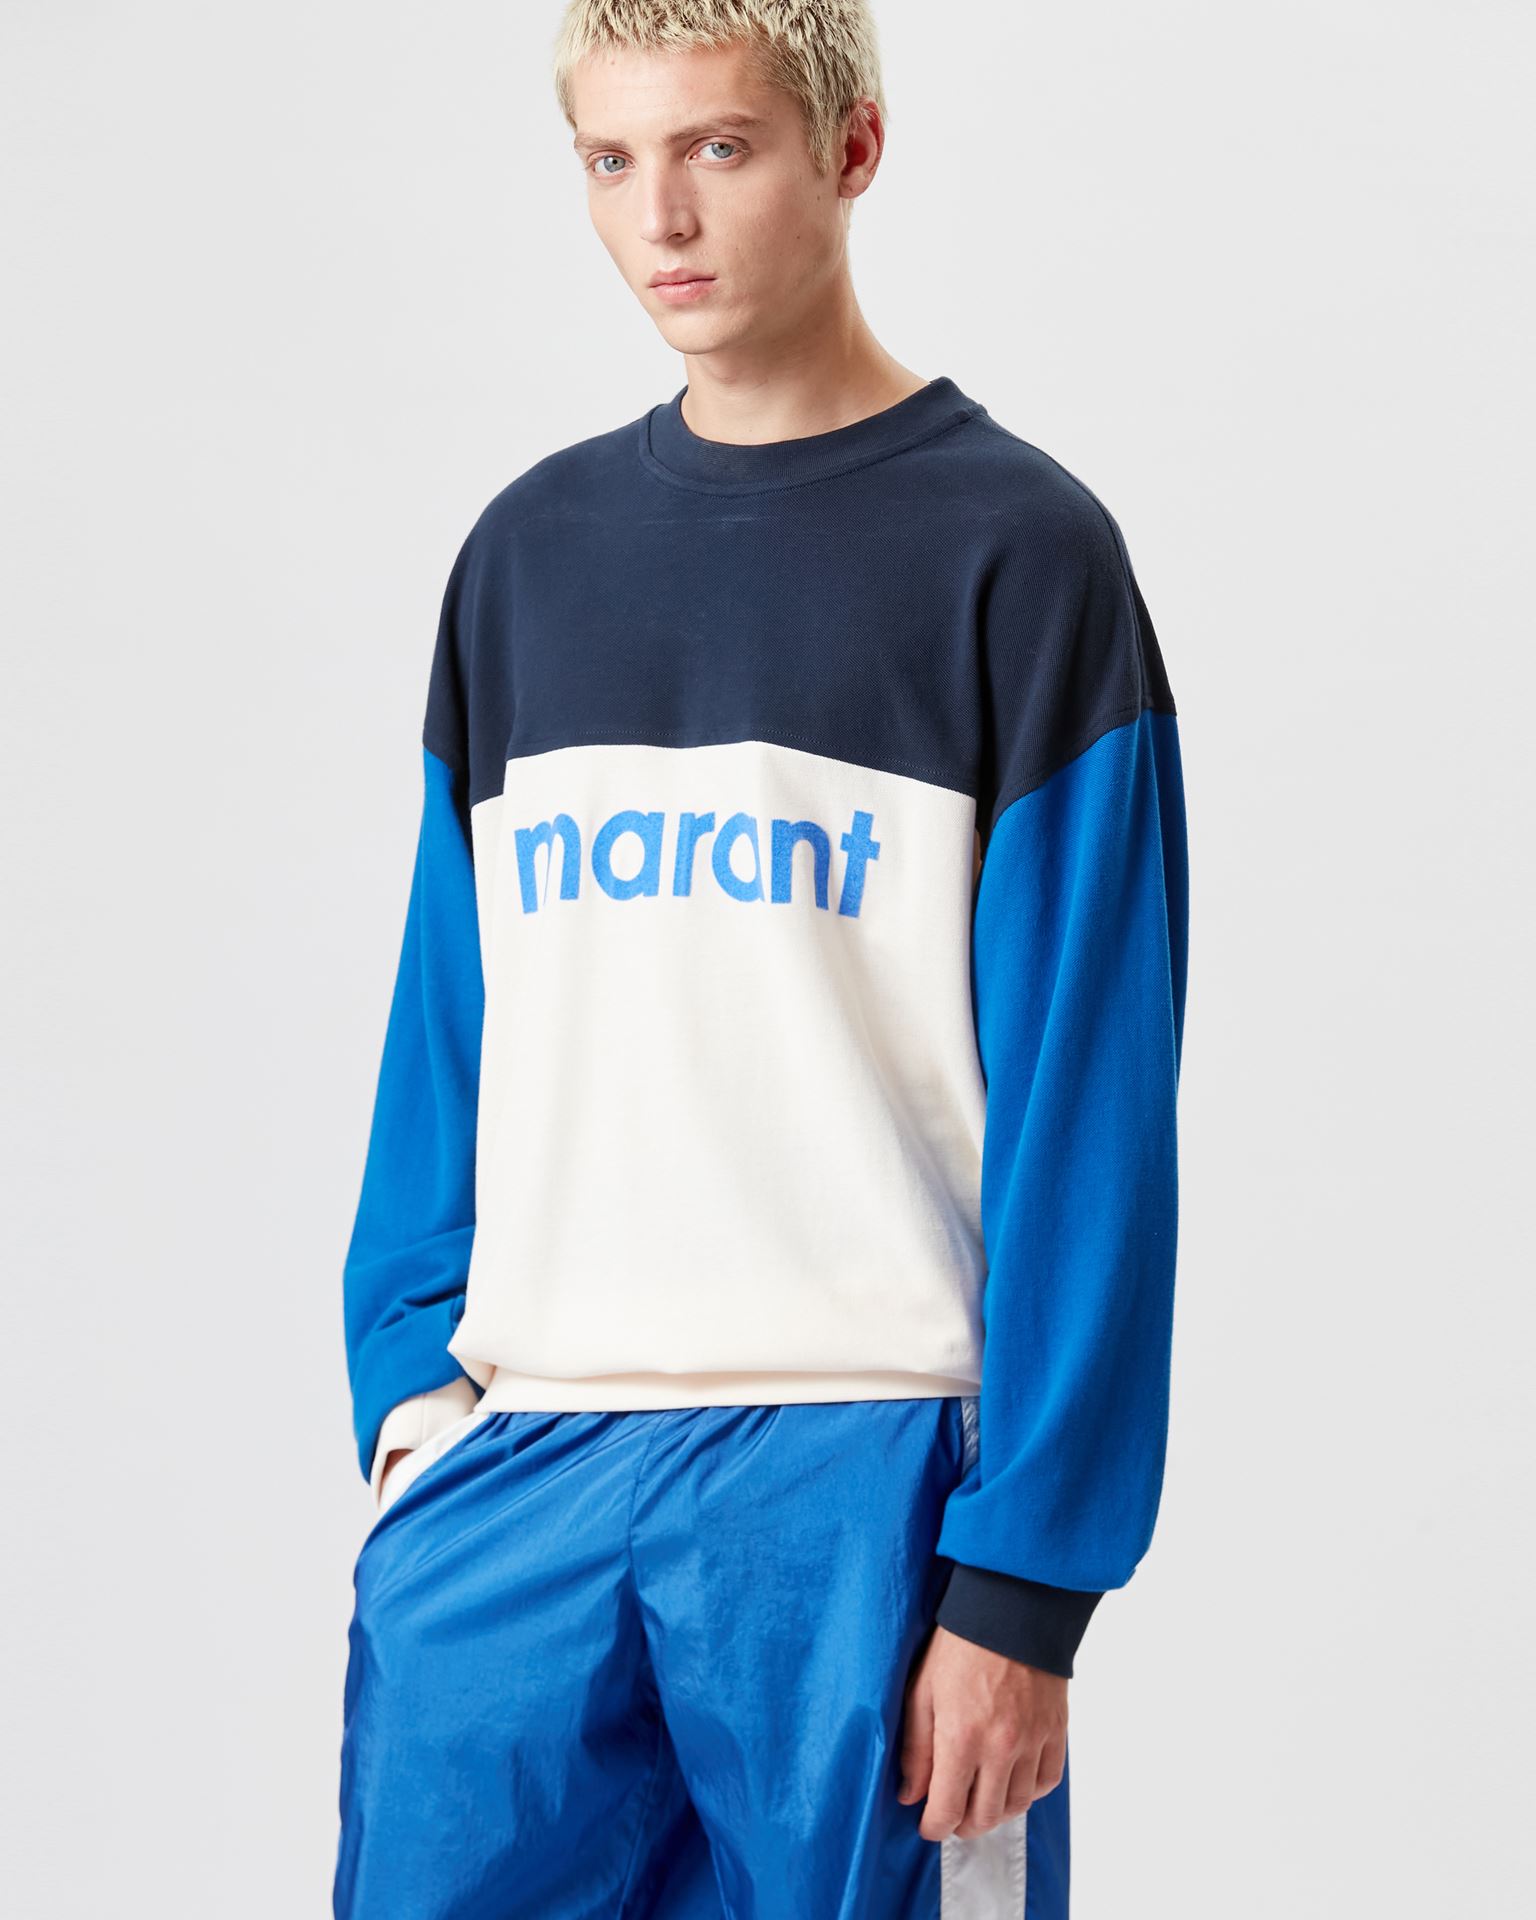 Isabel Marant, Aftone marant Cotton Sweatshirt - Men - Blue